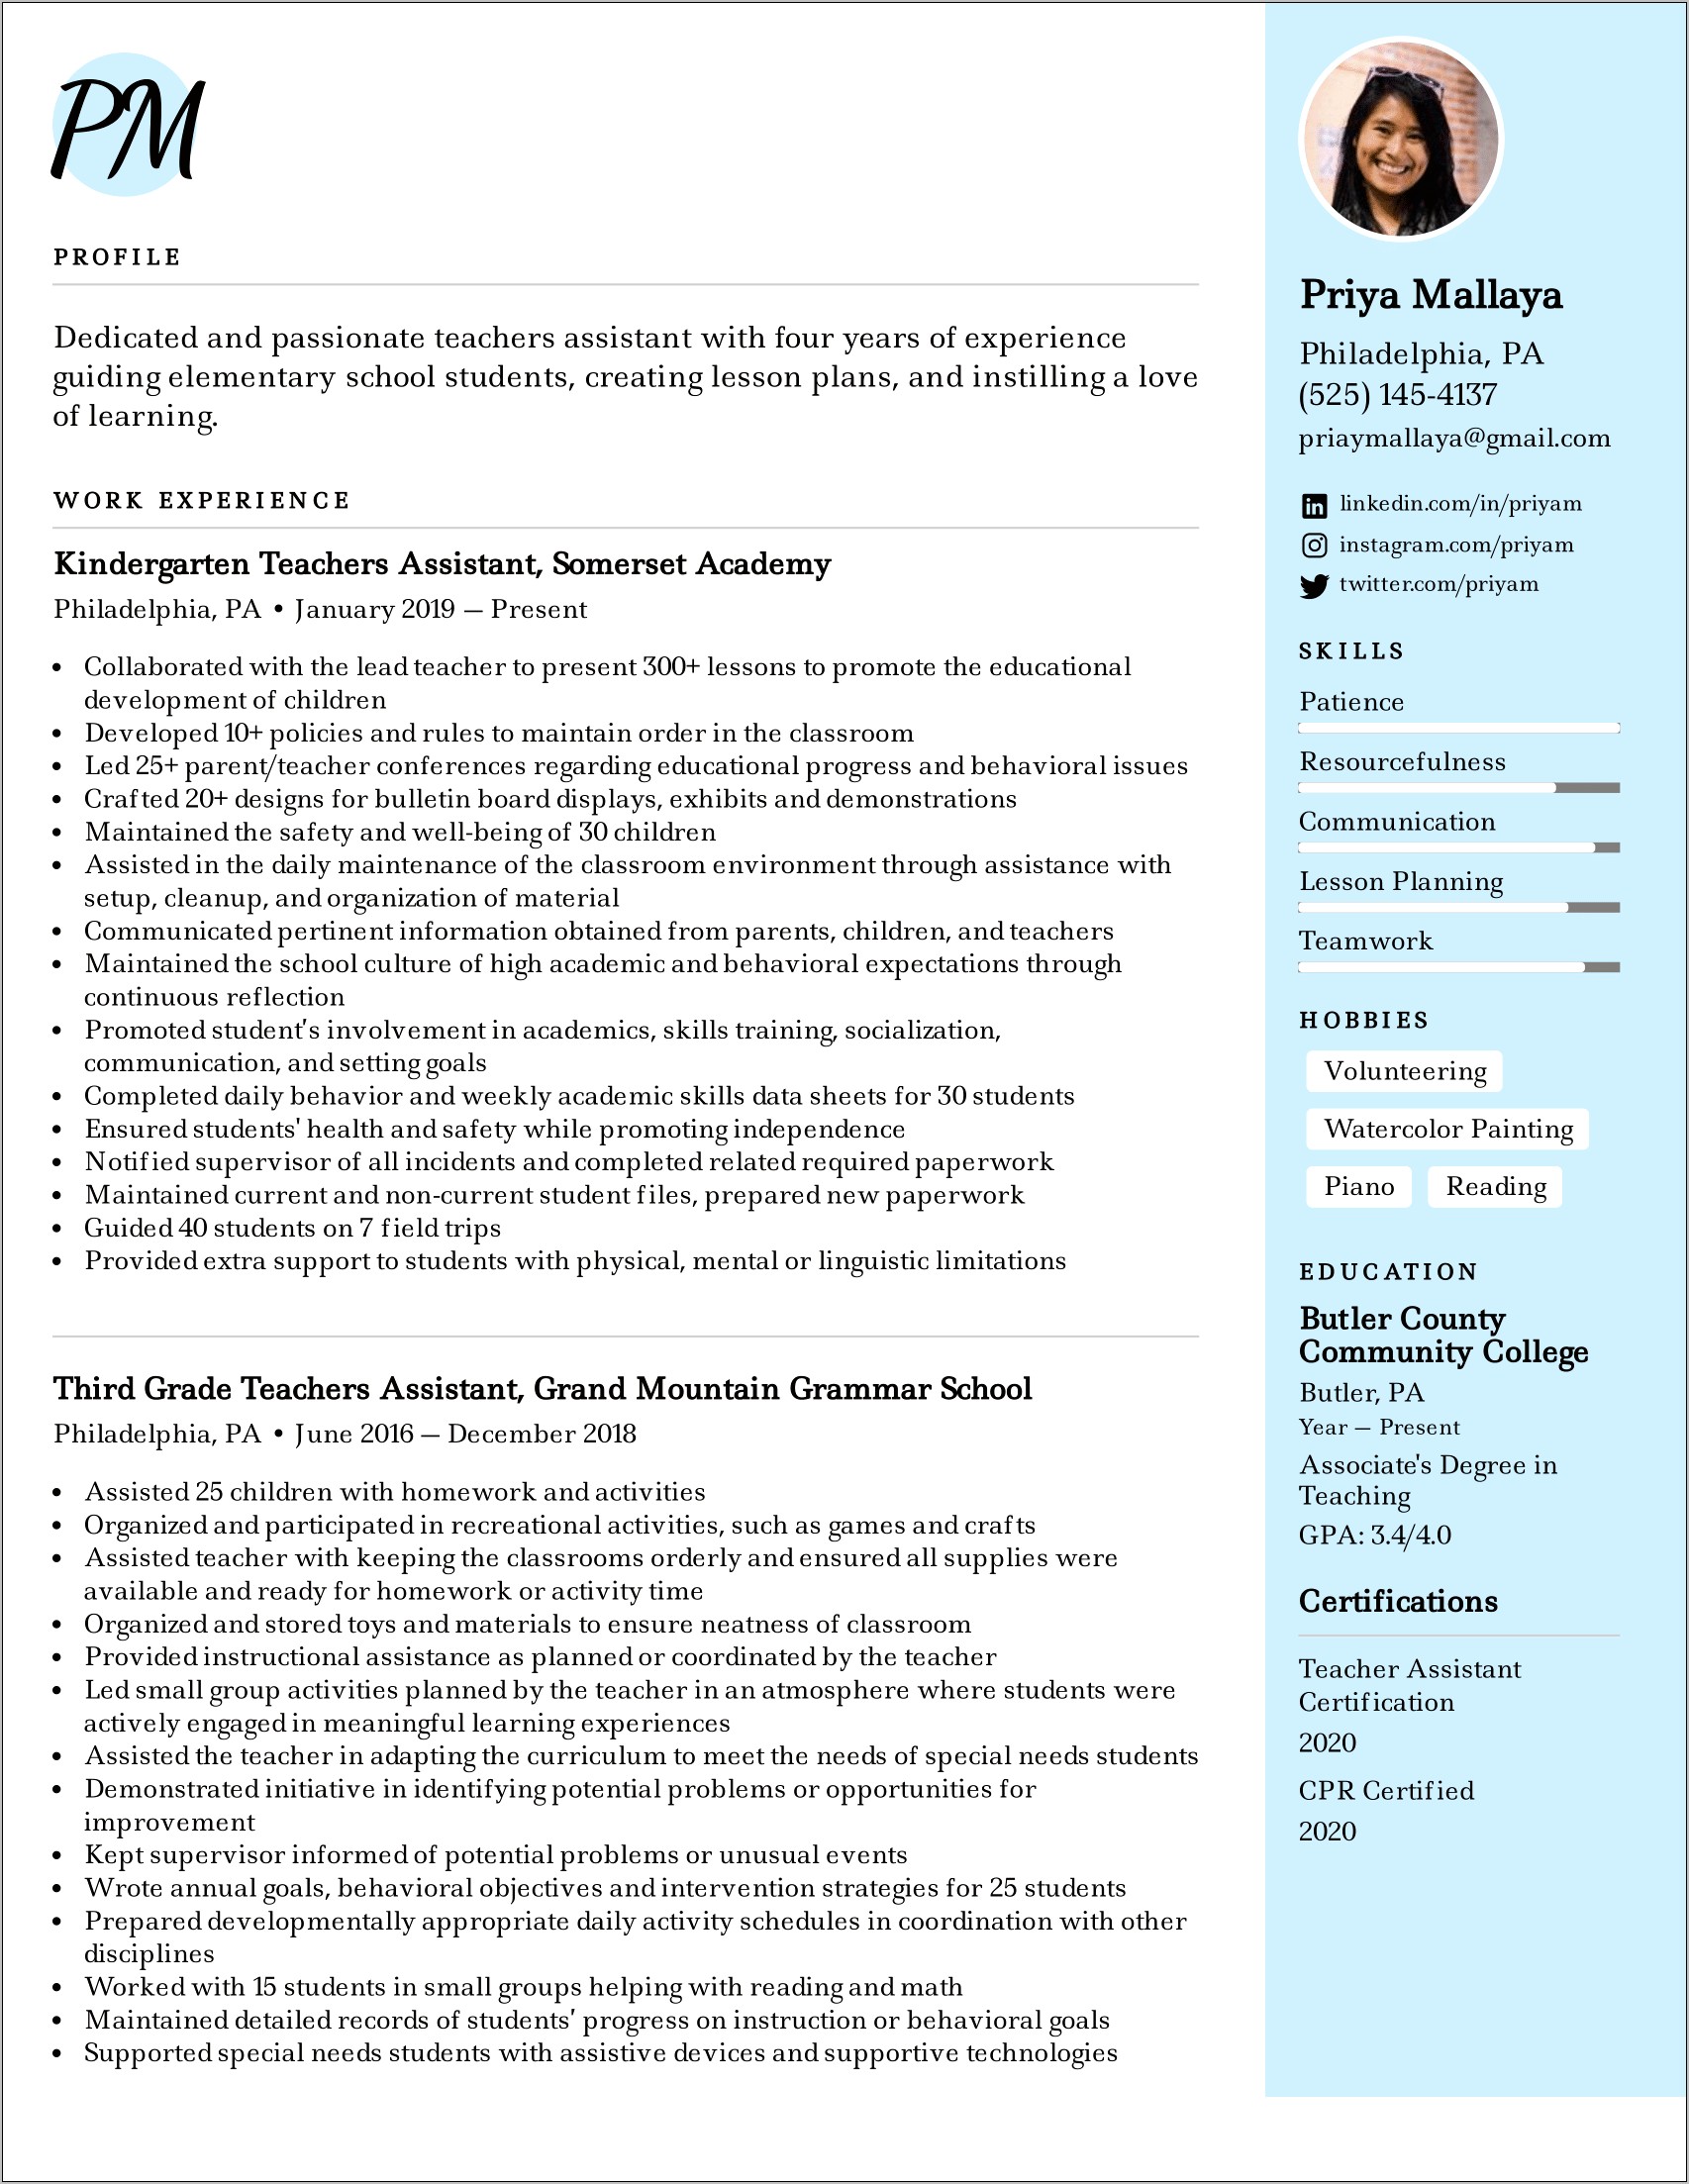 Resume Format For High School Science Teacher